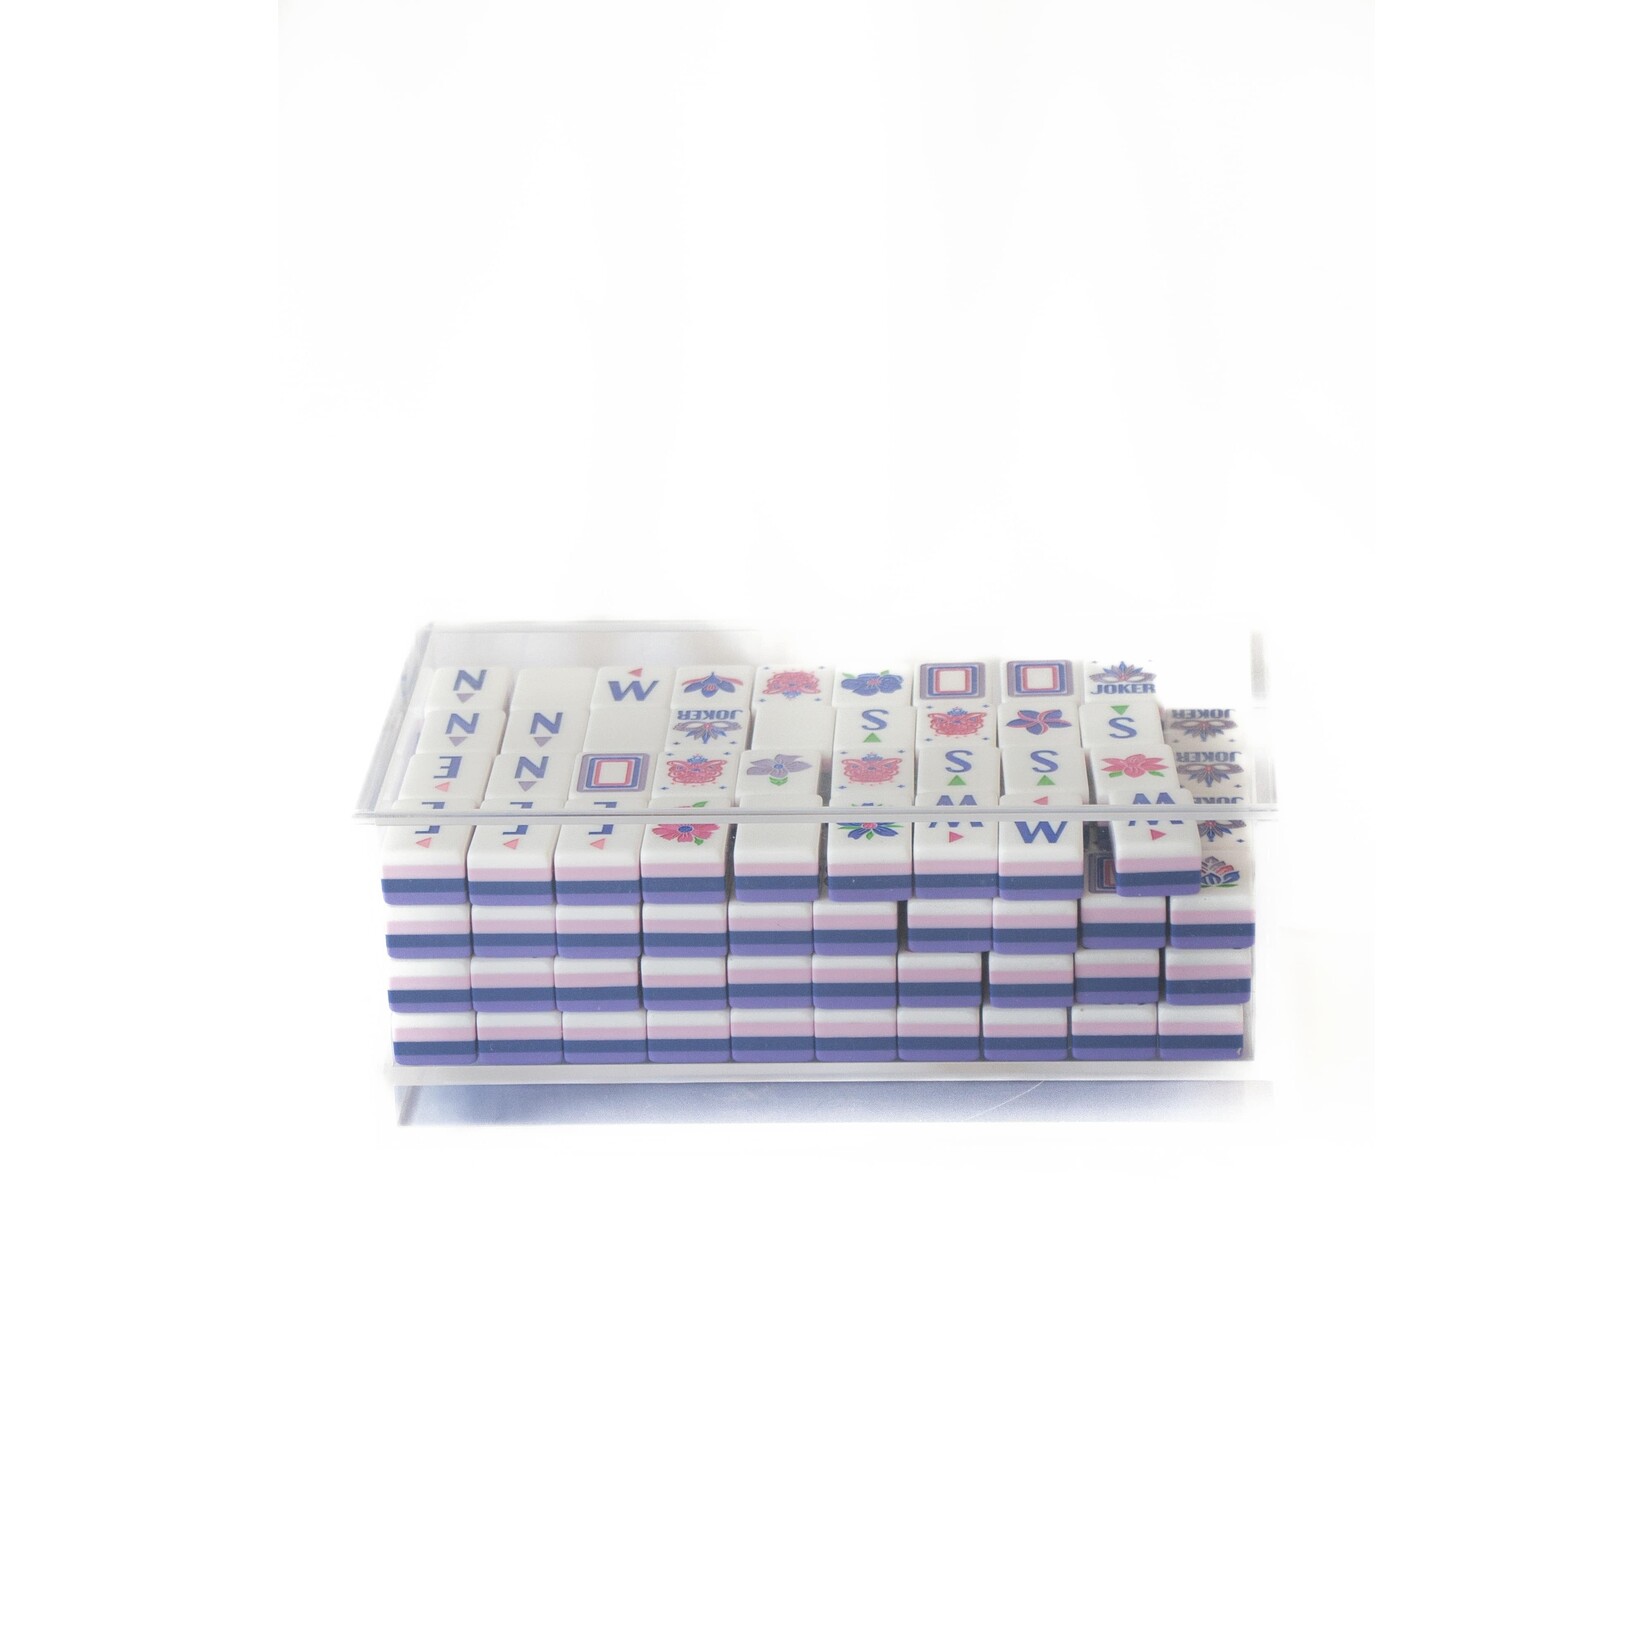 Oh My Mahjong Mahjong Box- Clear lid